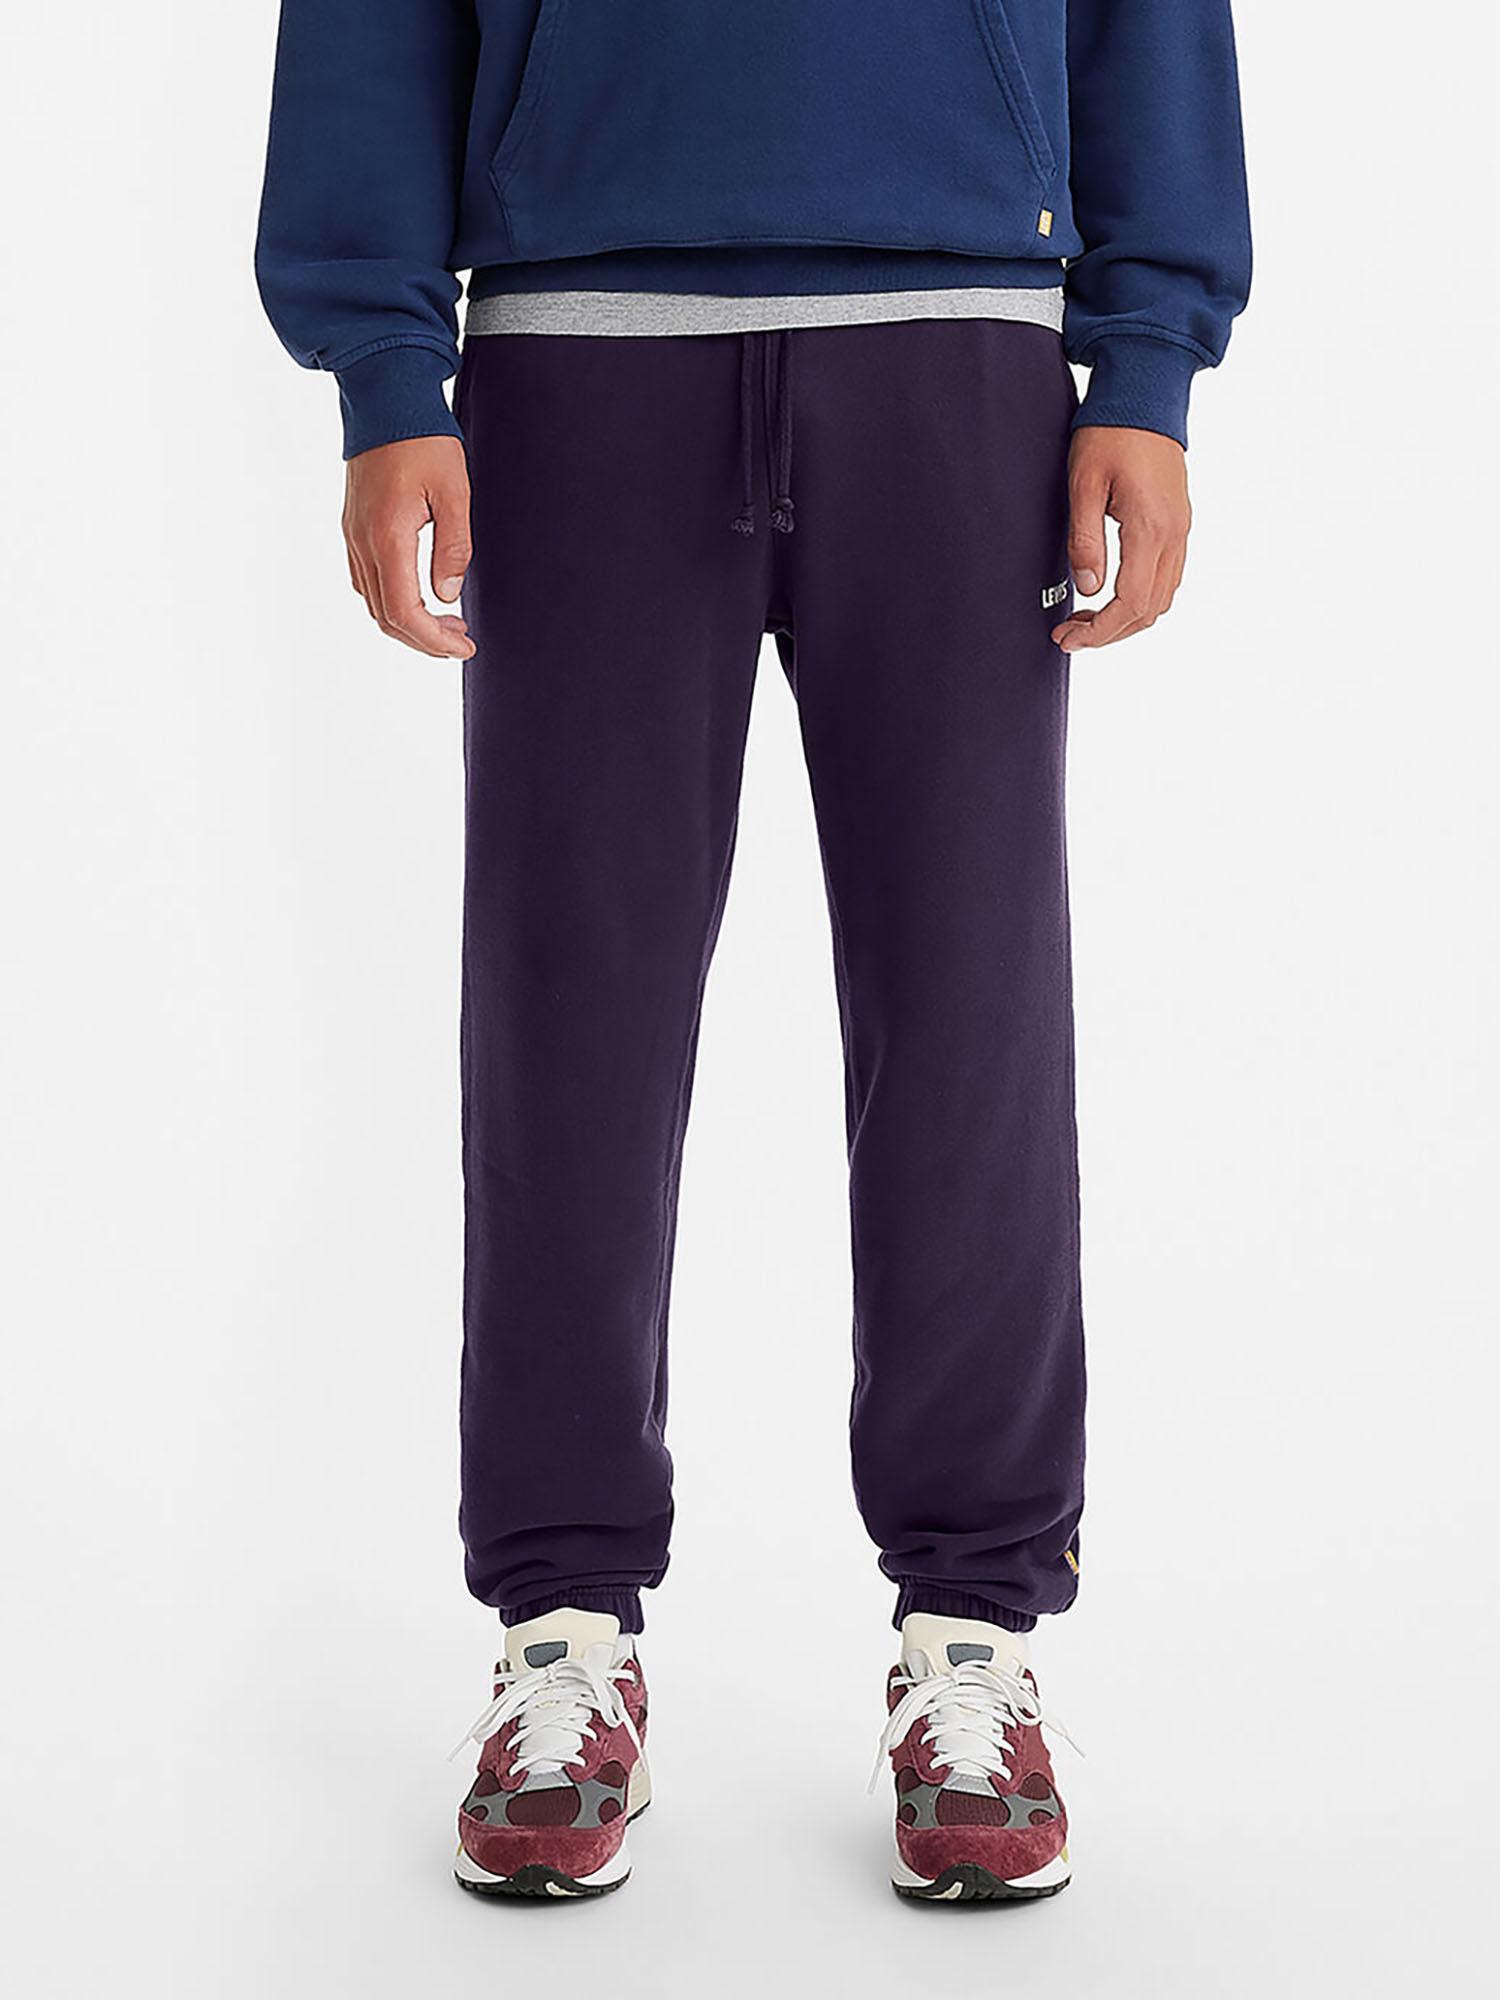 men's purple regular fit trousers